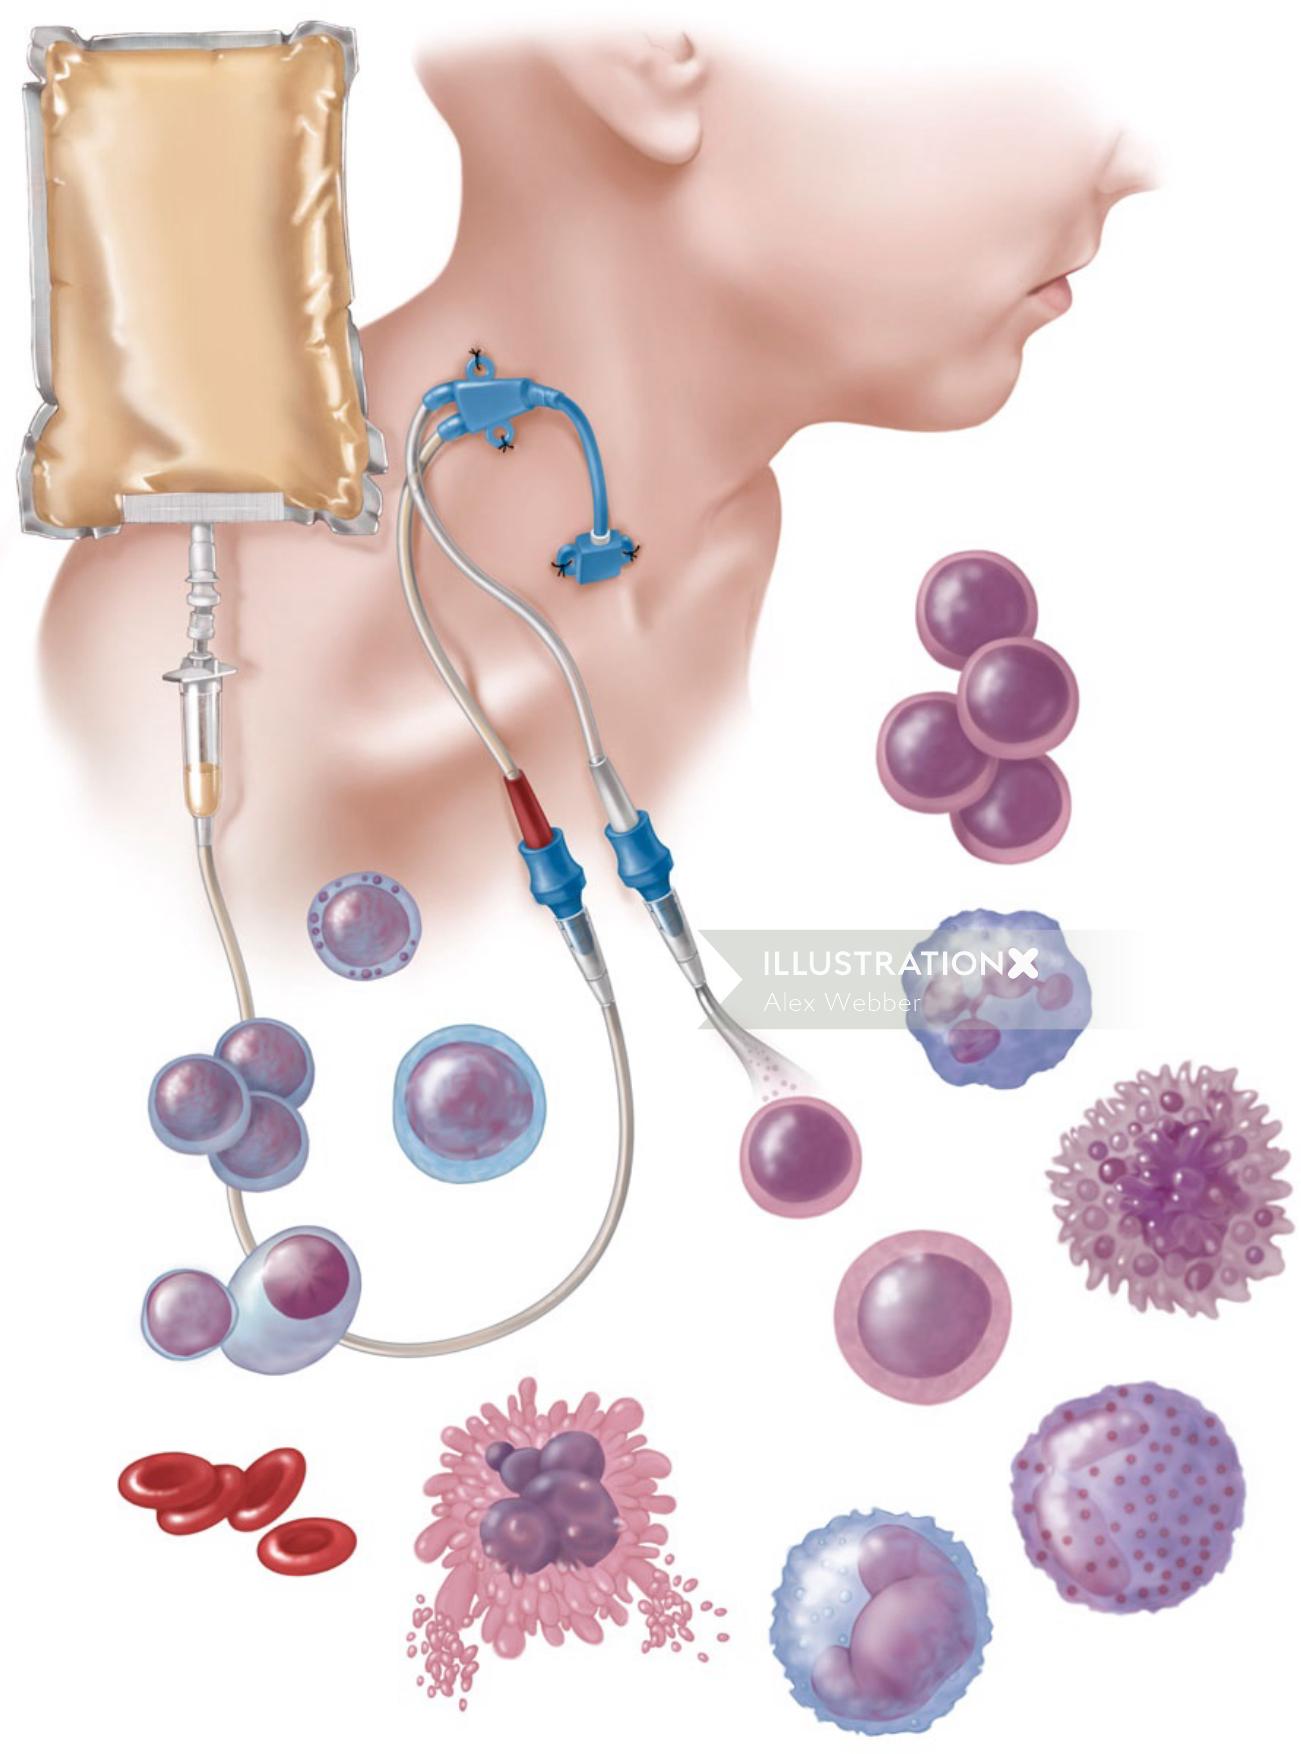 Informativo de Transplante de Células-Tronco Hematopoiéticas